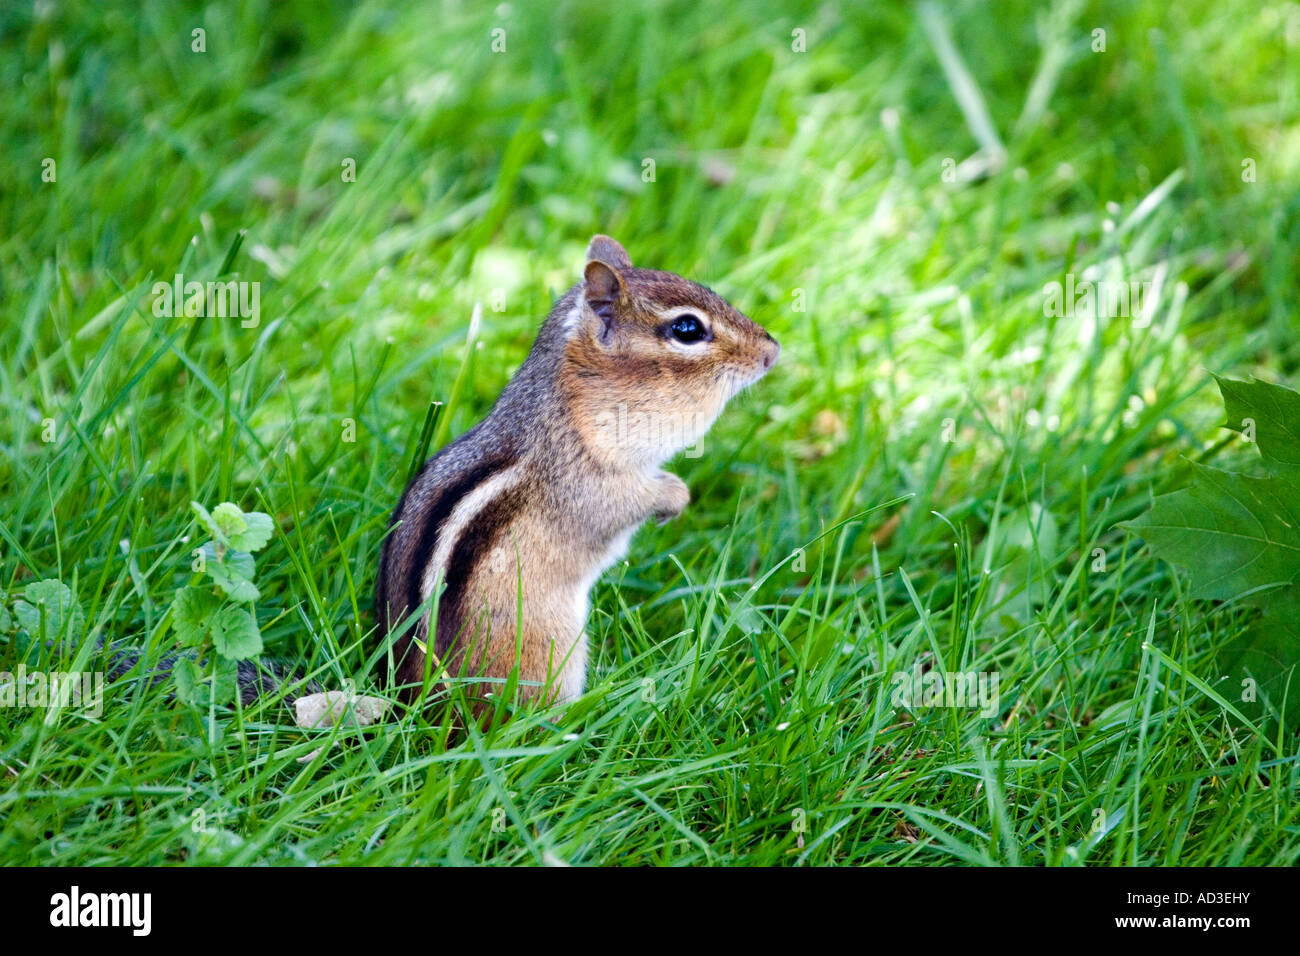 Chipmunk standing in grass Stock Photo